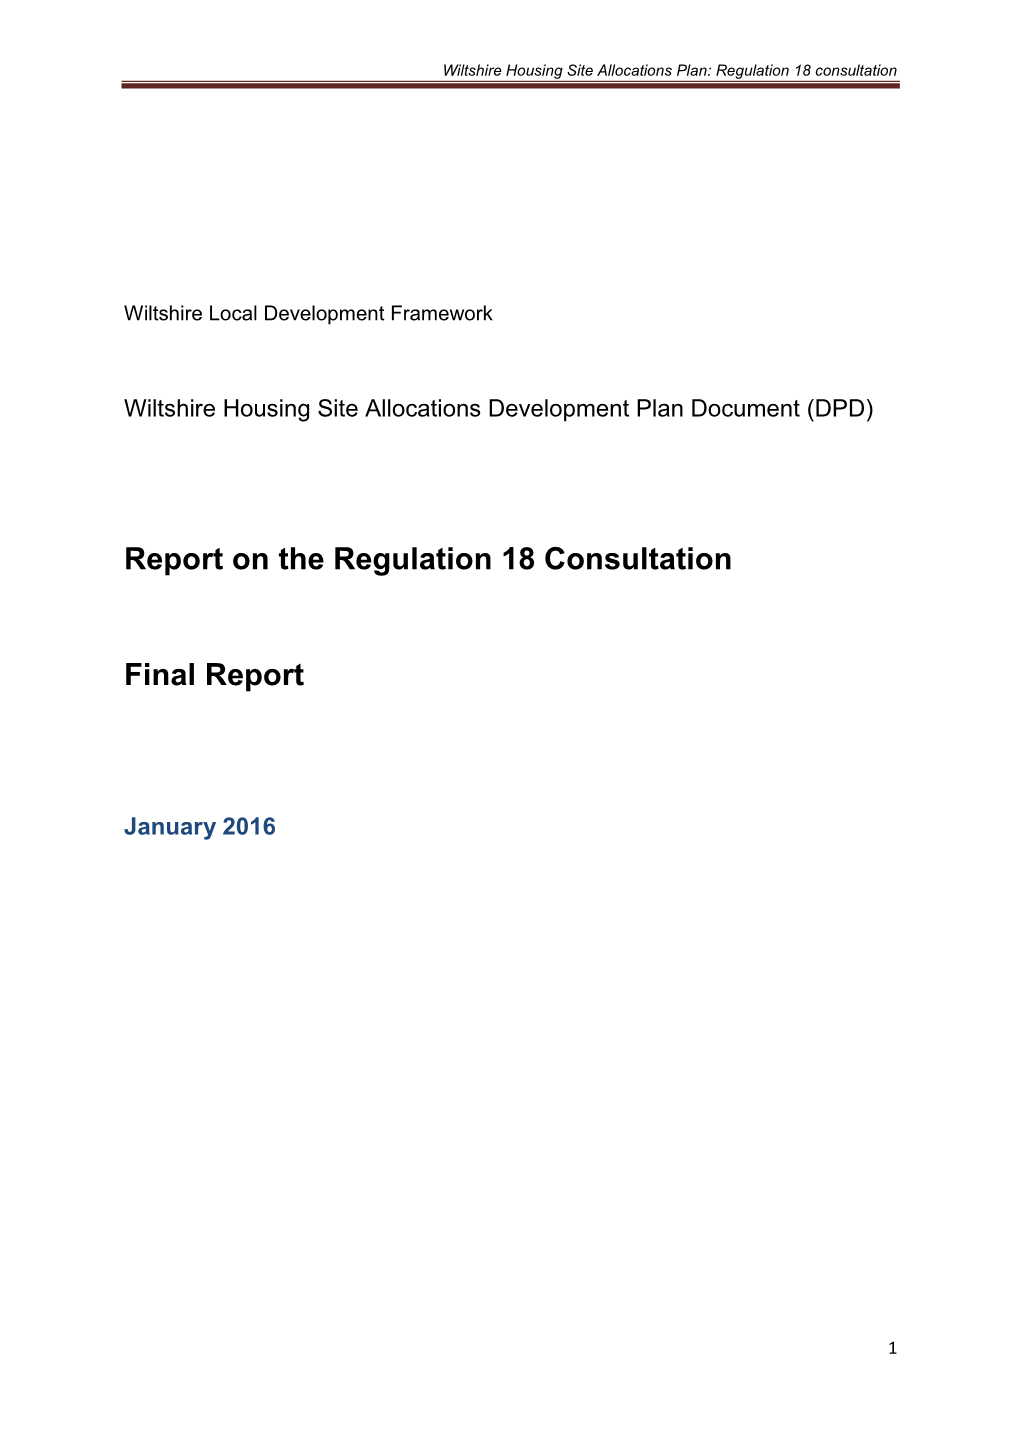 Wiltshire Housing Site Allocations Plan: Regulation 18 Consultation